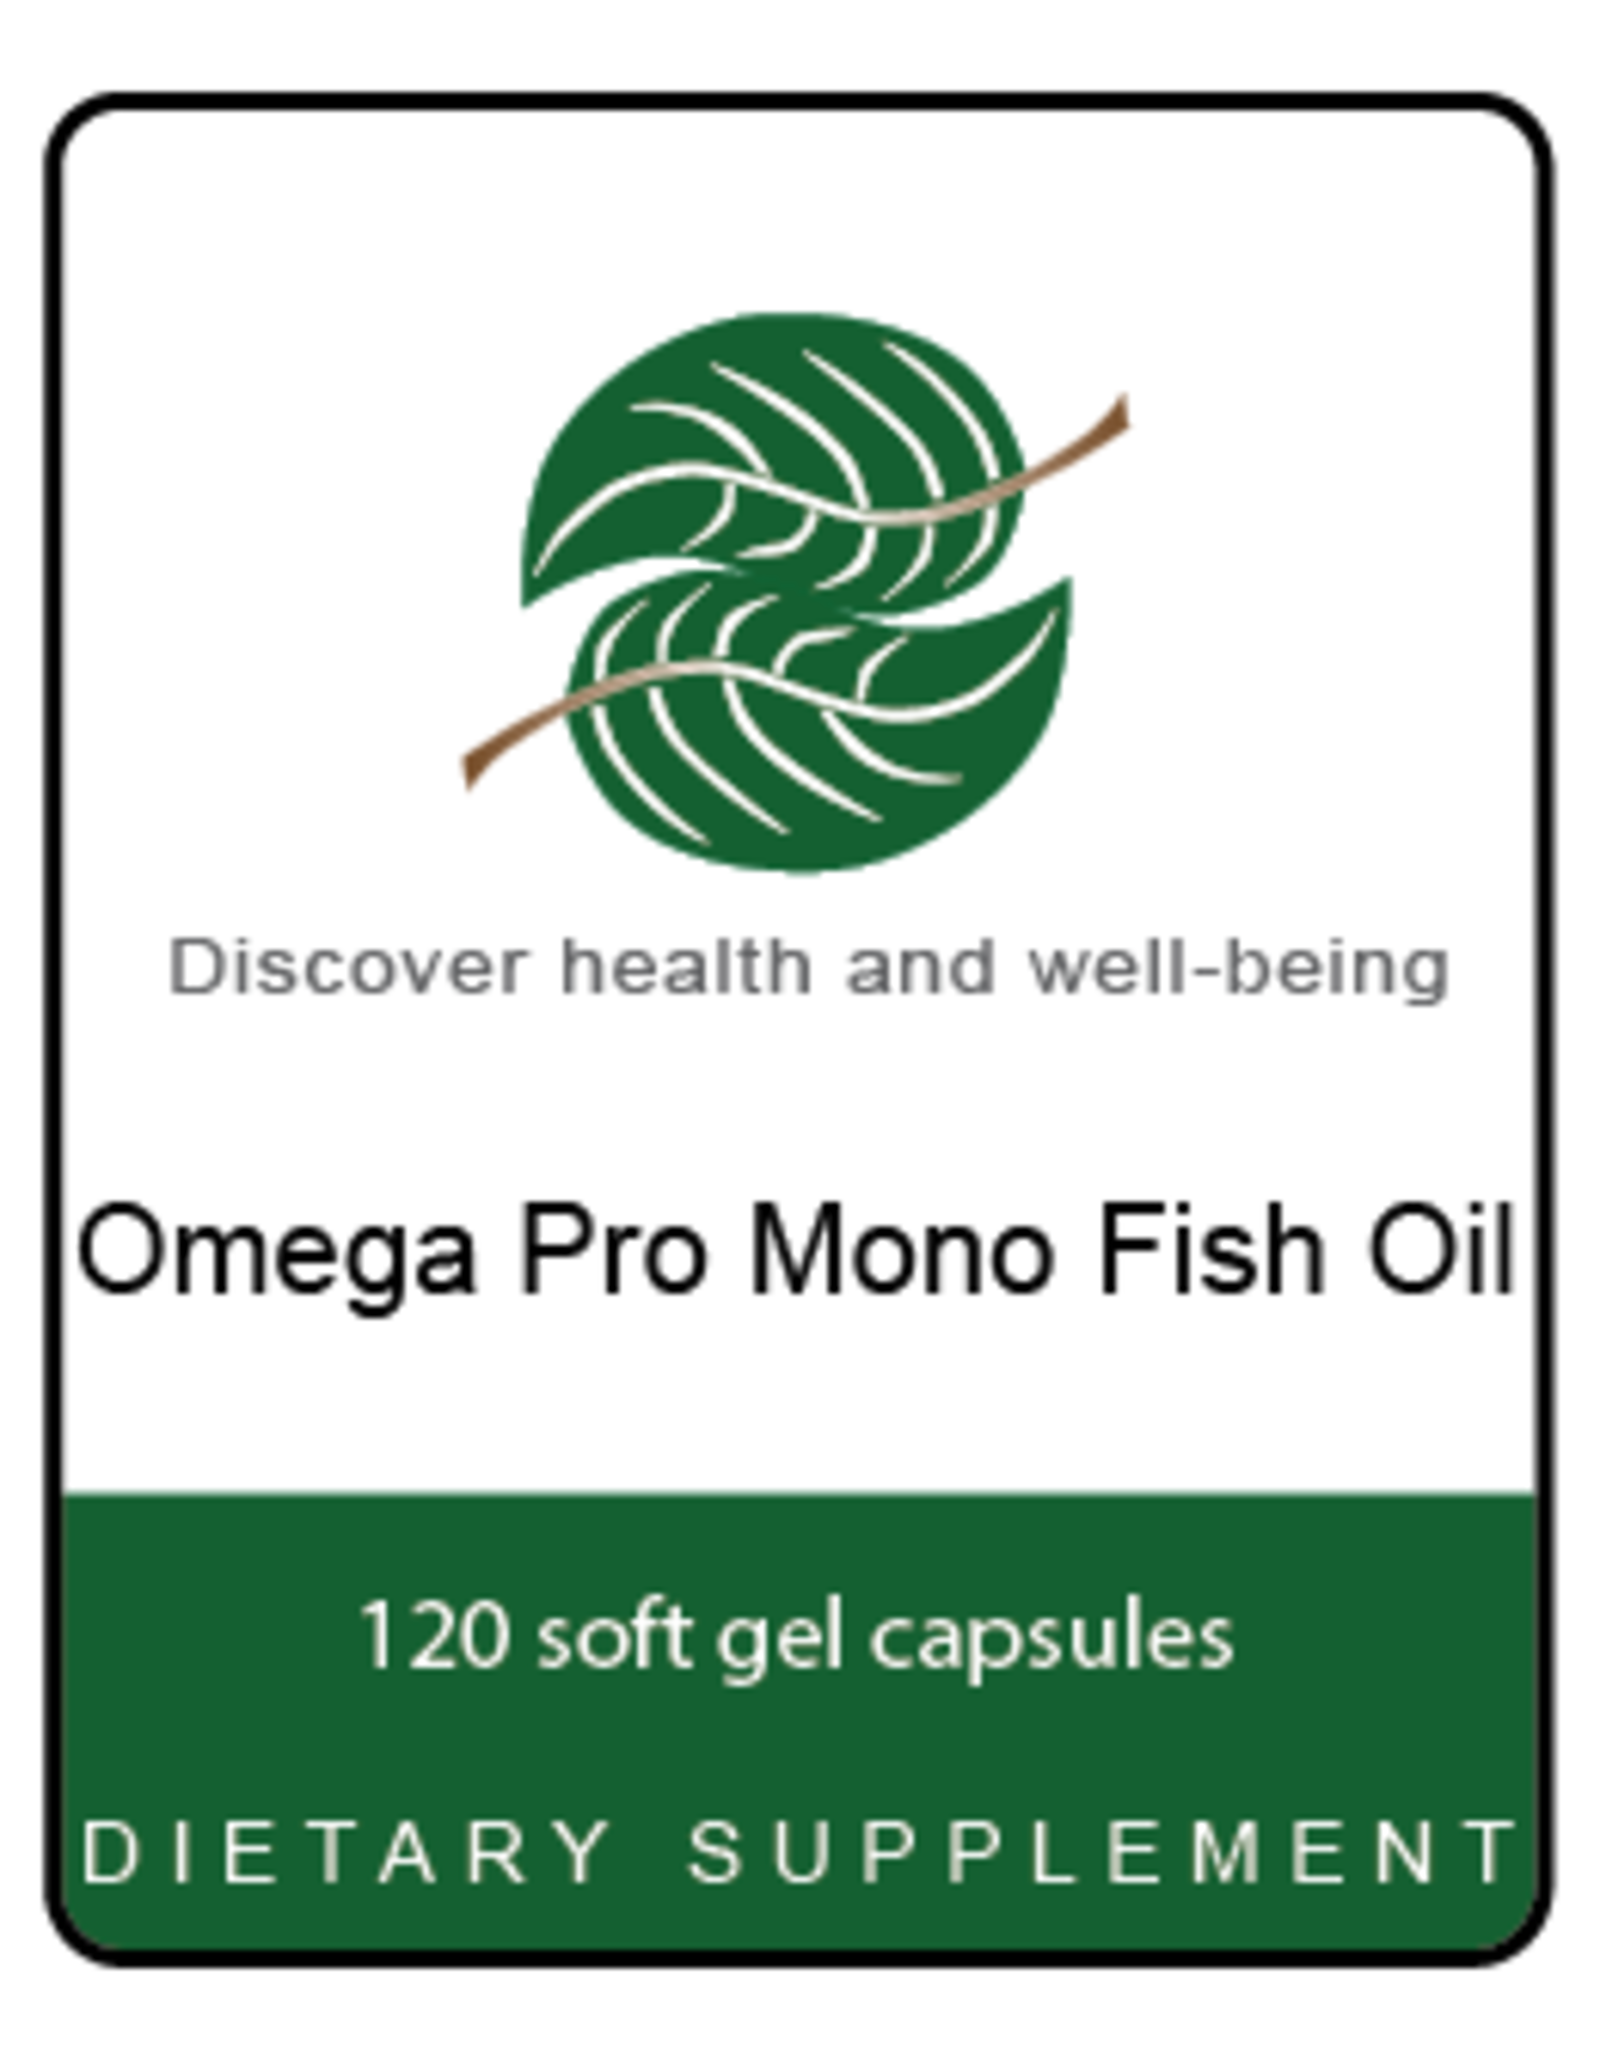 Dr. Joan Sy Medical Dr. Sy's Omega Pro Mono Fish Oil (120 Softgels)